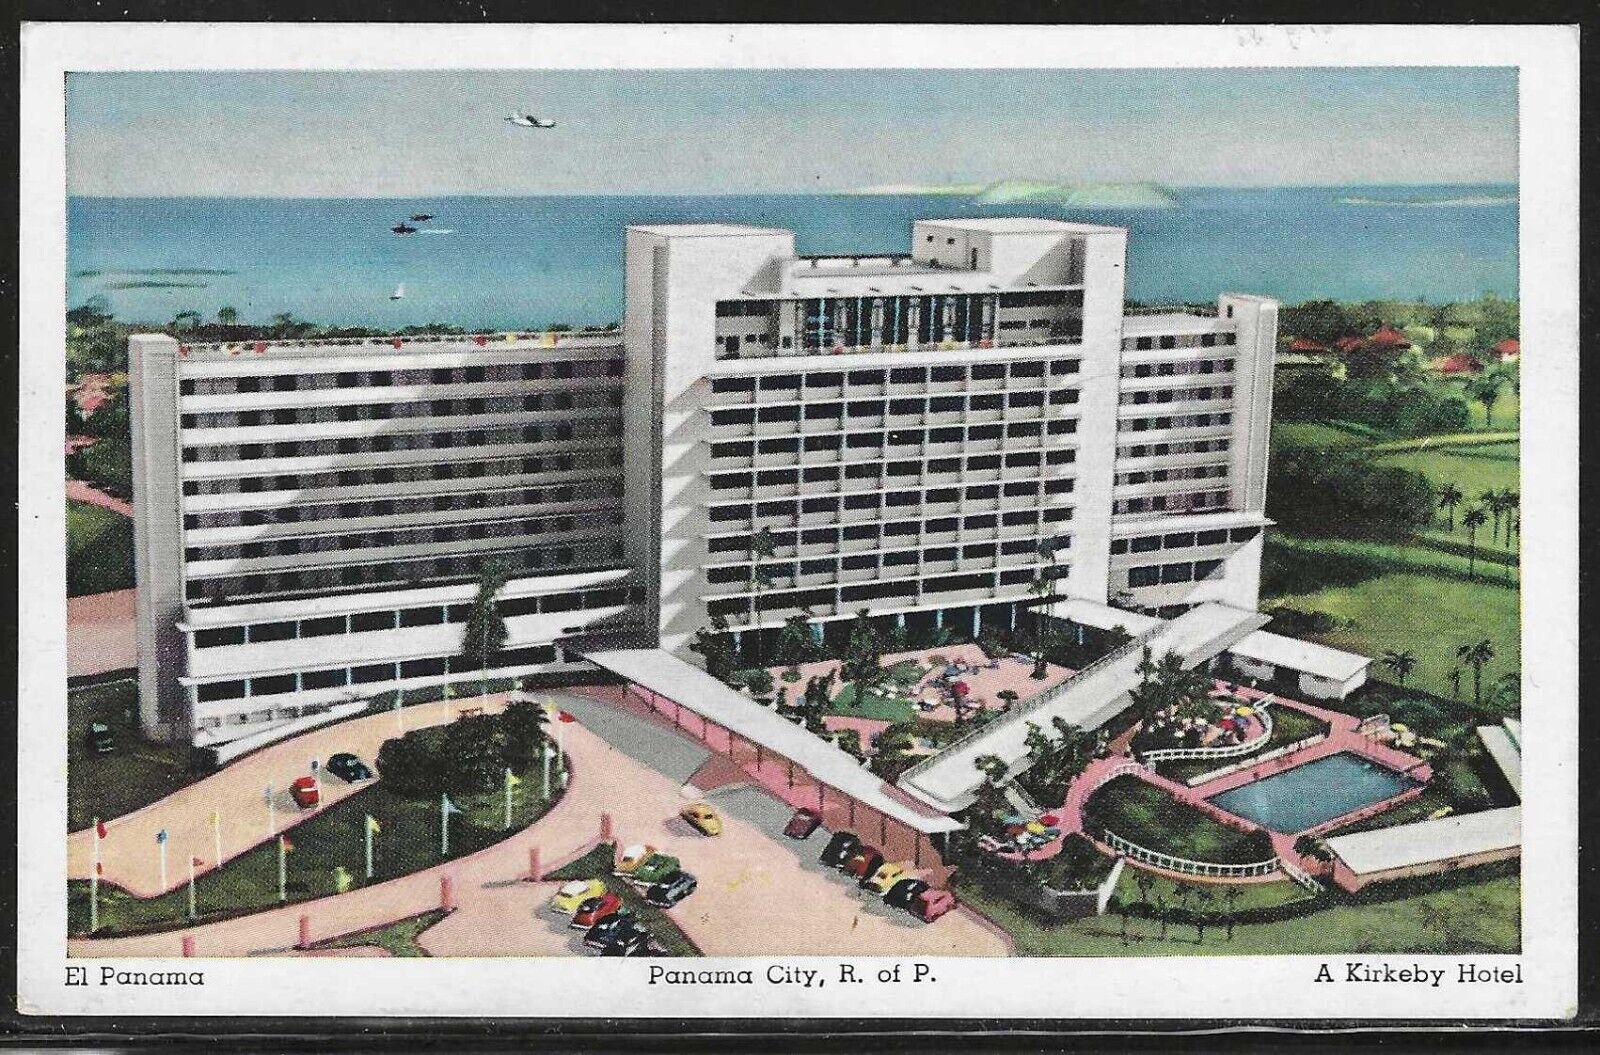 El Panama Hotel, Panama City, Republic of Panama, Early Postcard, Used in 1953